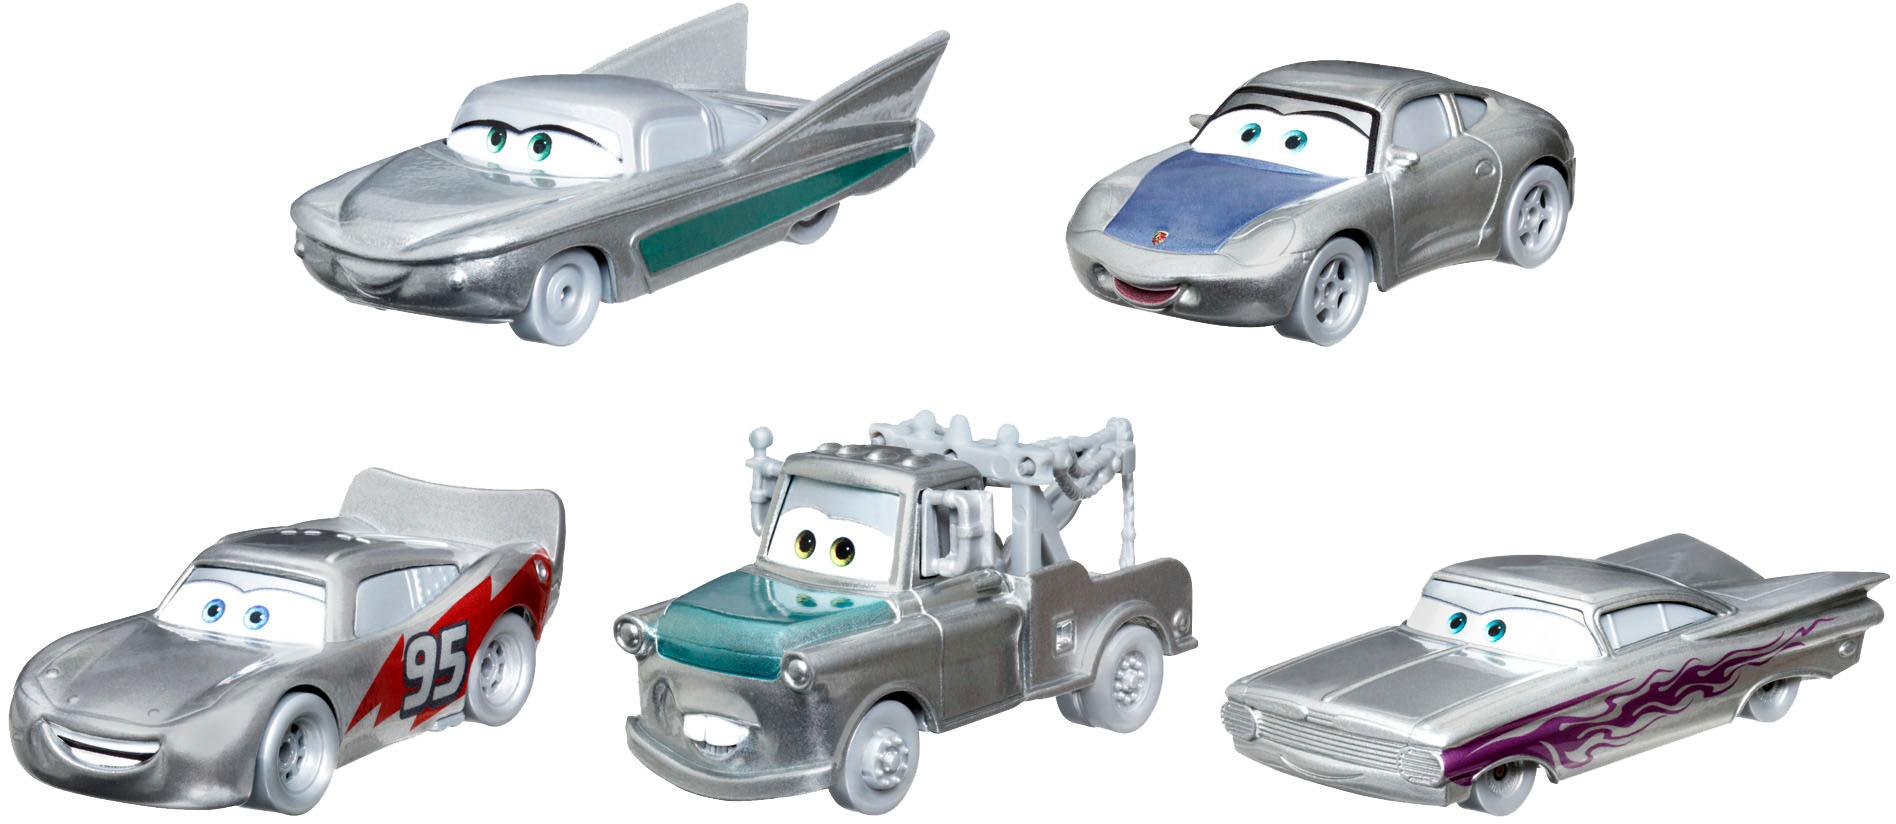 Disney And Pixar Cars 3 Vehicle 5-Packs